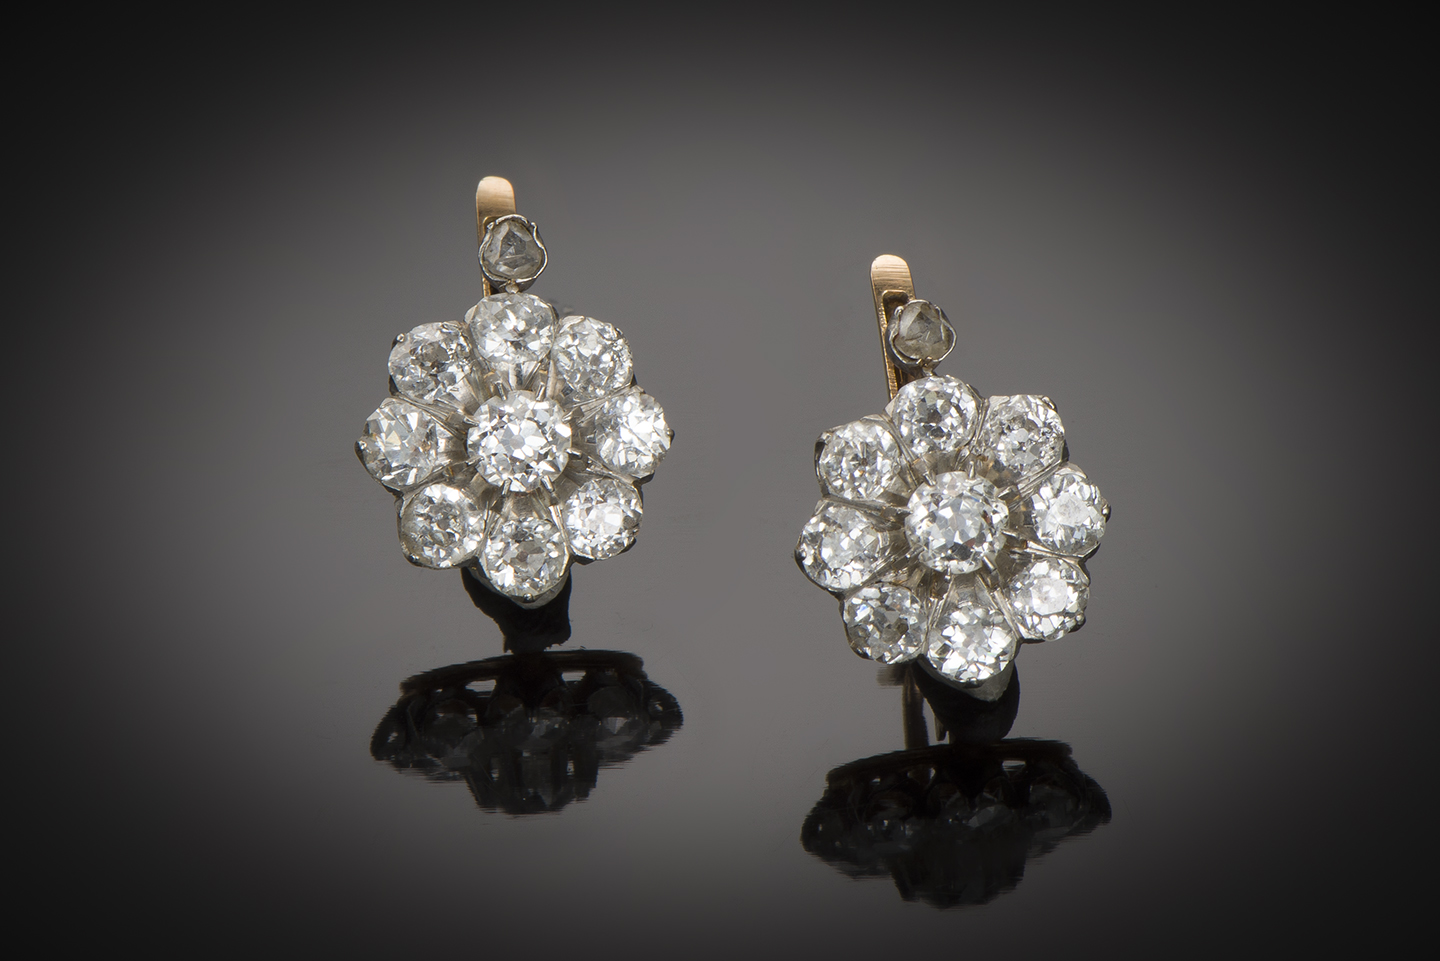 Late 19th century diamond earrings (2.20 carats)-1